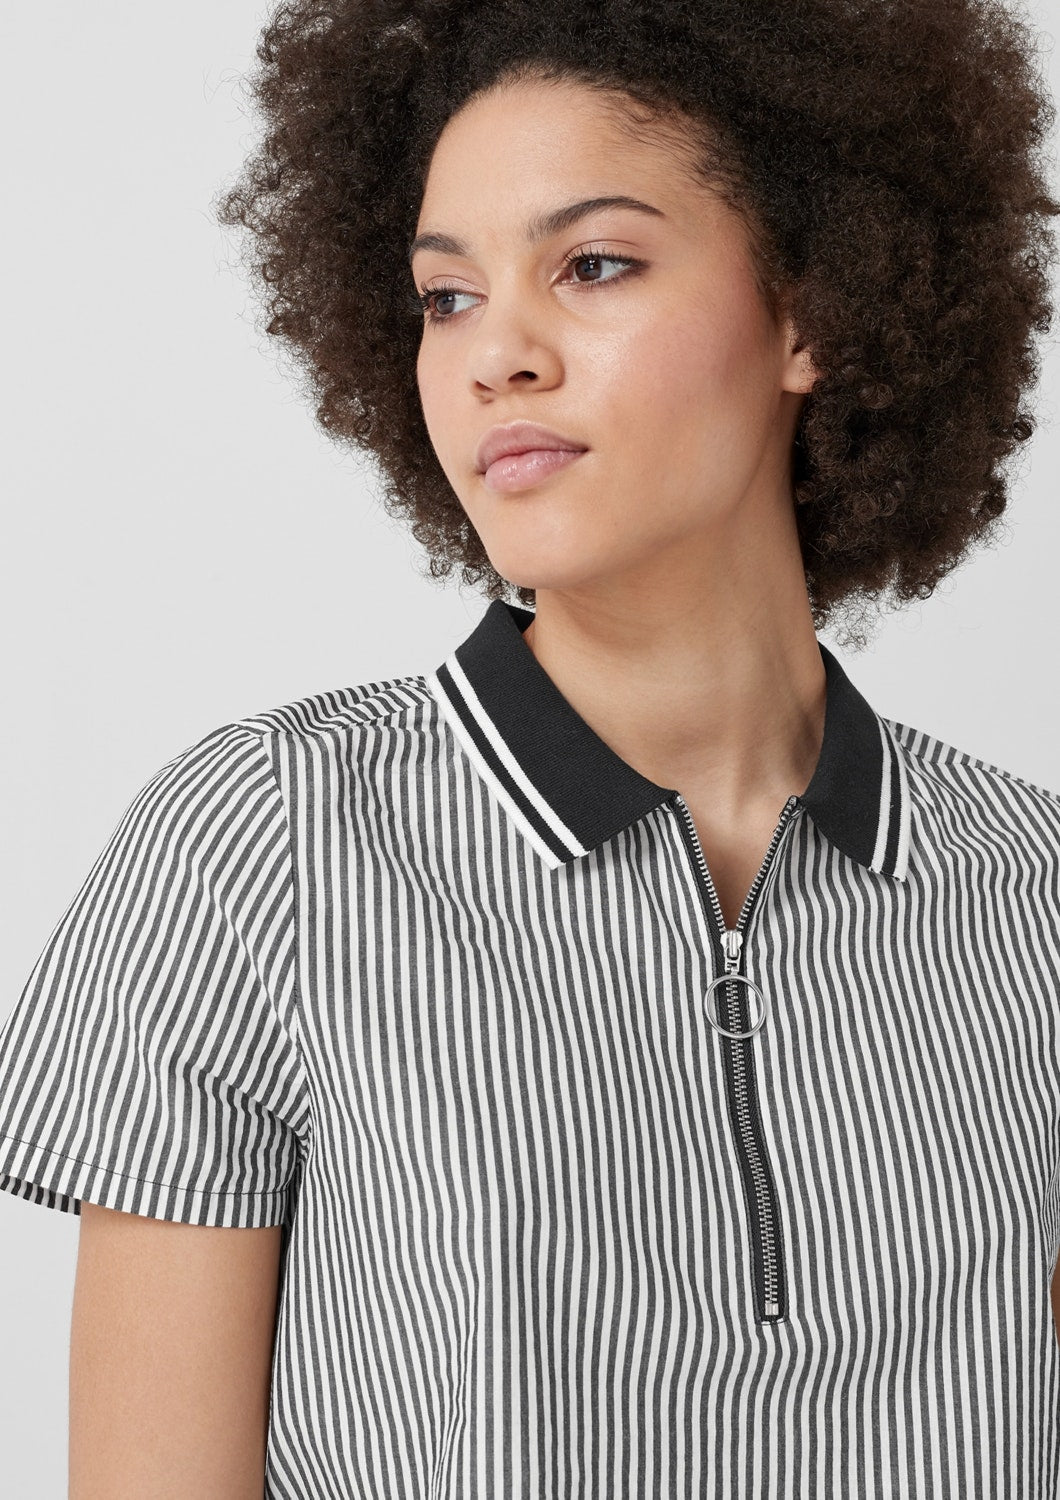 Short sleeve blouse